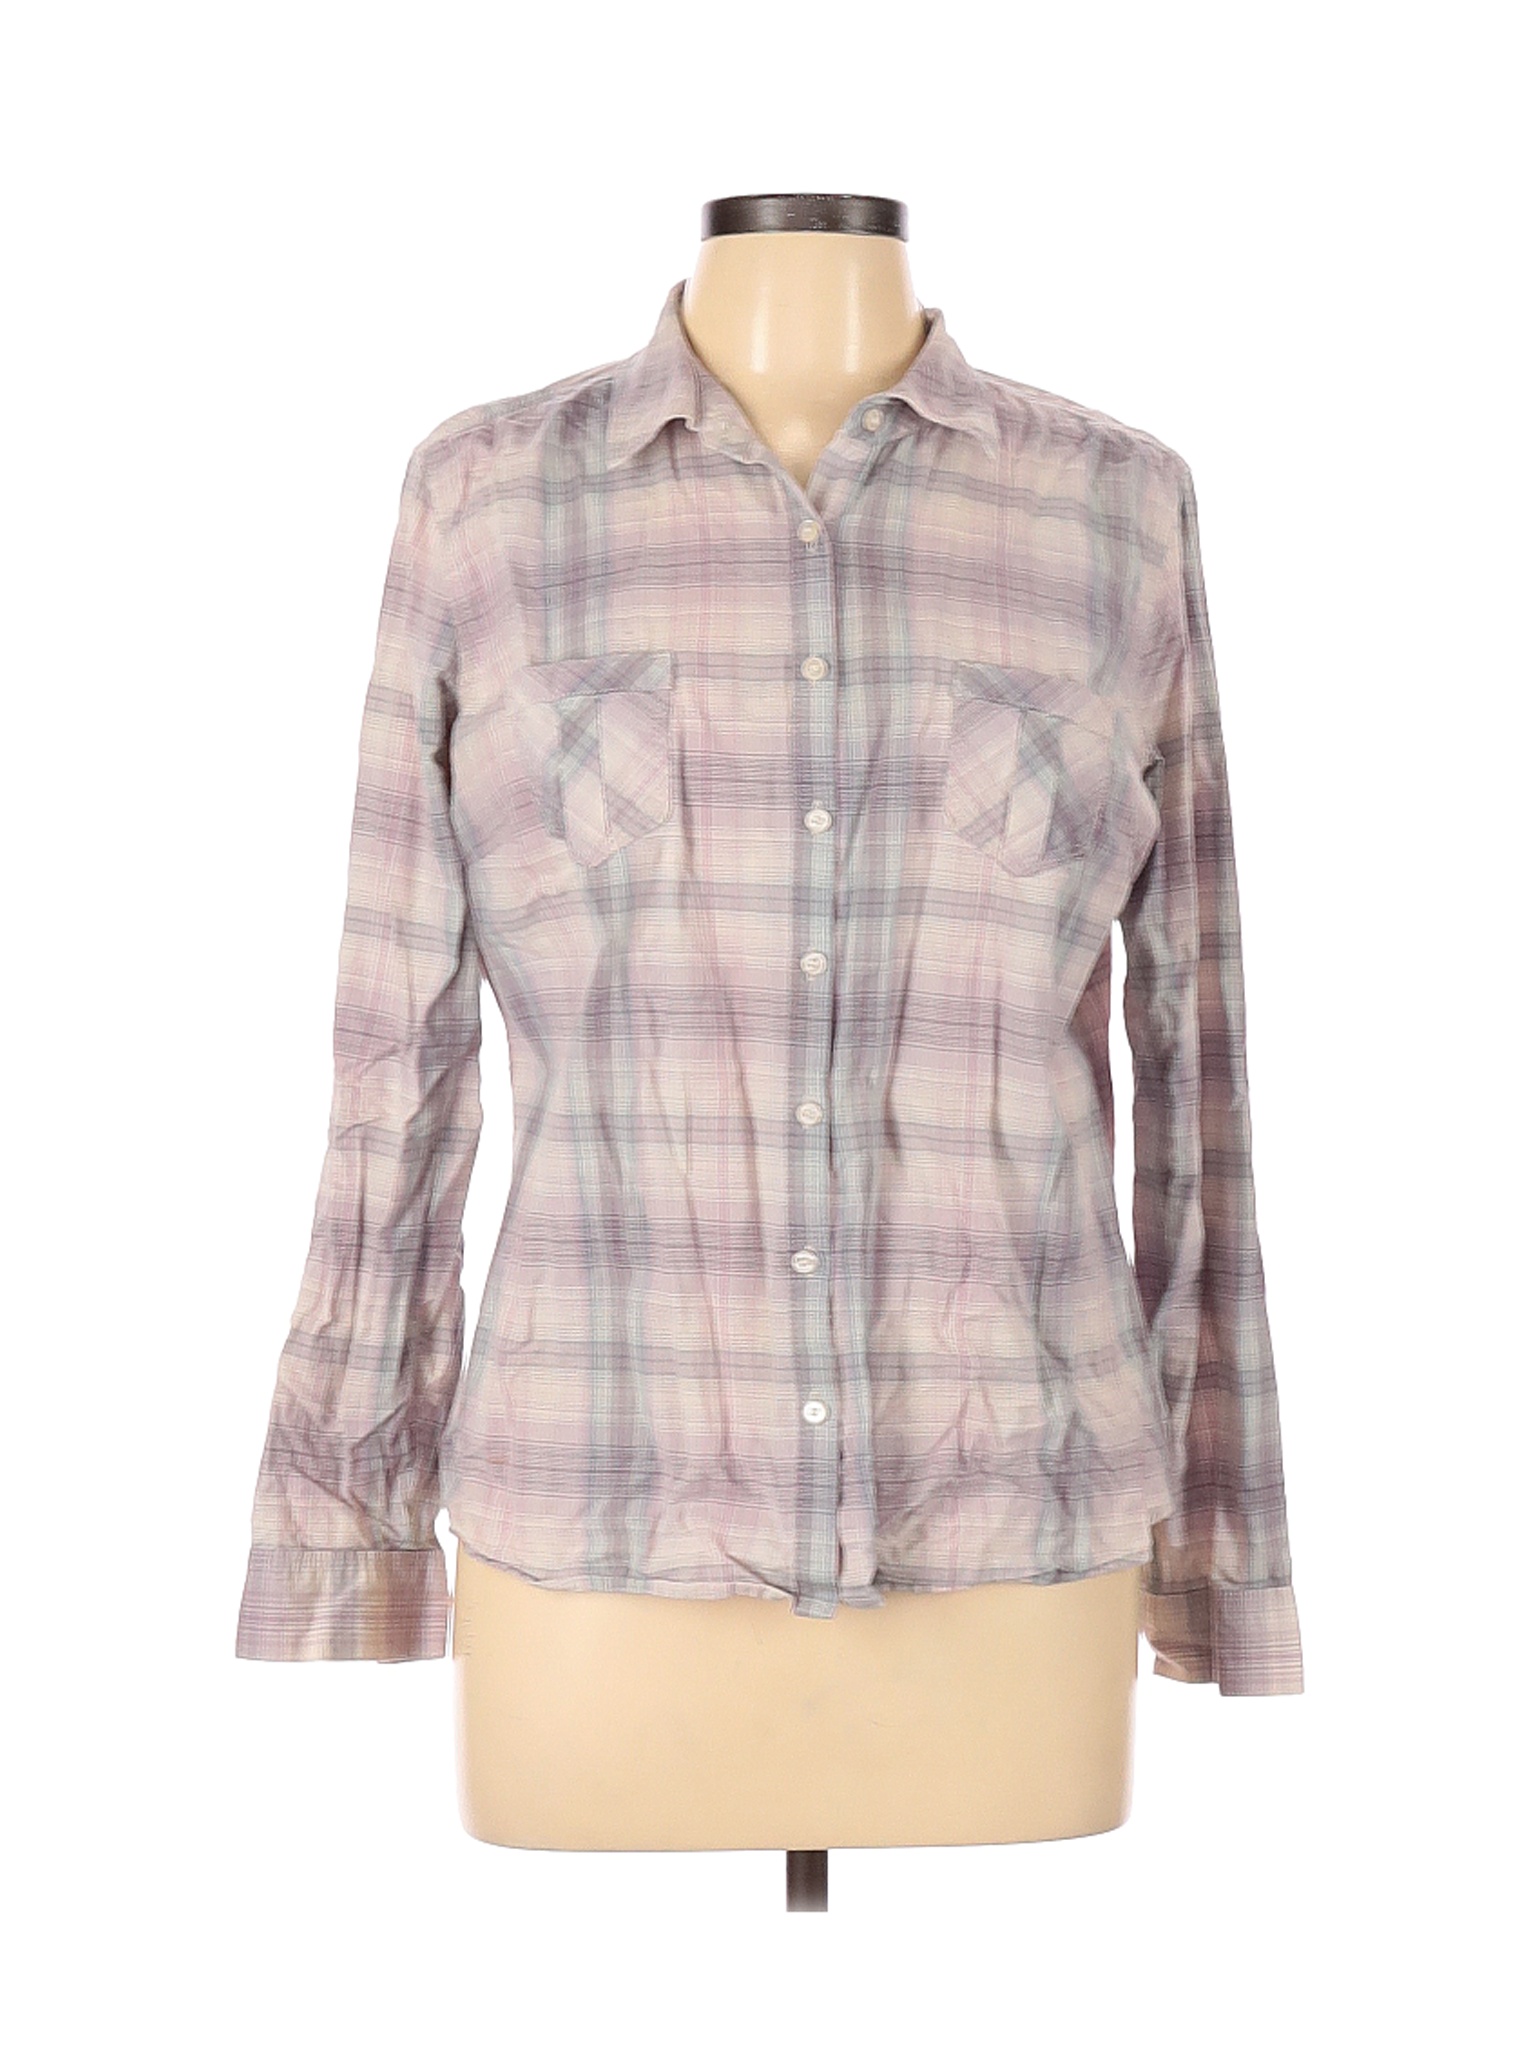 SONOMA life + style Women Purple Long Sleeve Button-Down Shirt L | eBay